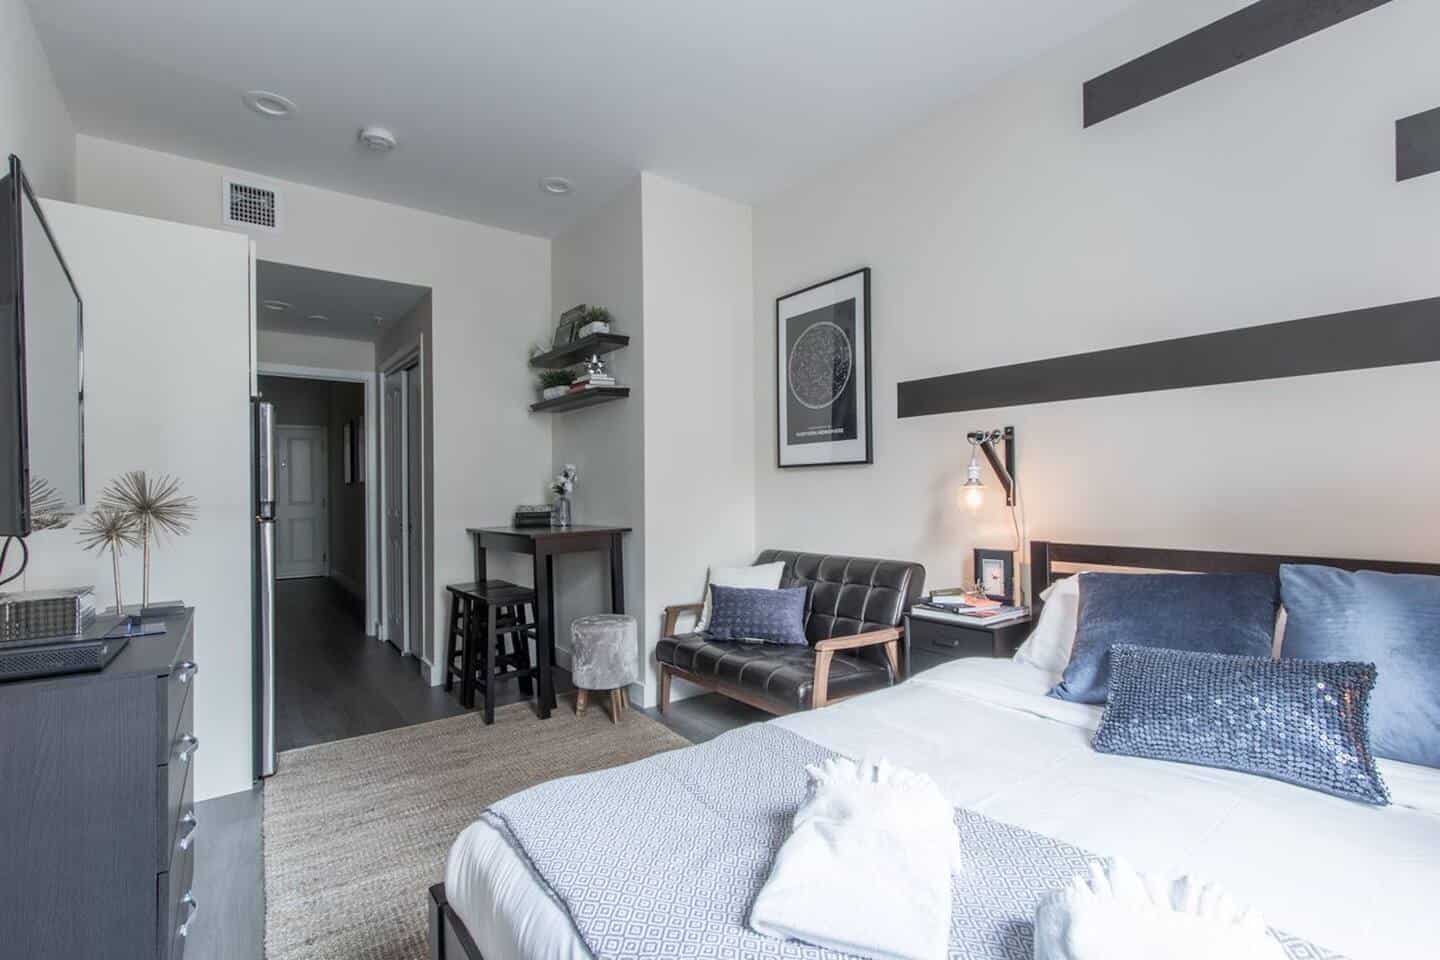 Image of Airbnb rental in Boston, Massachusetts